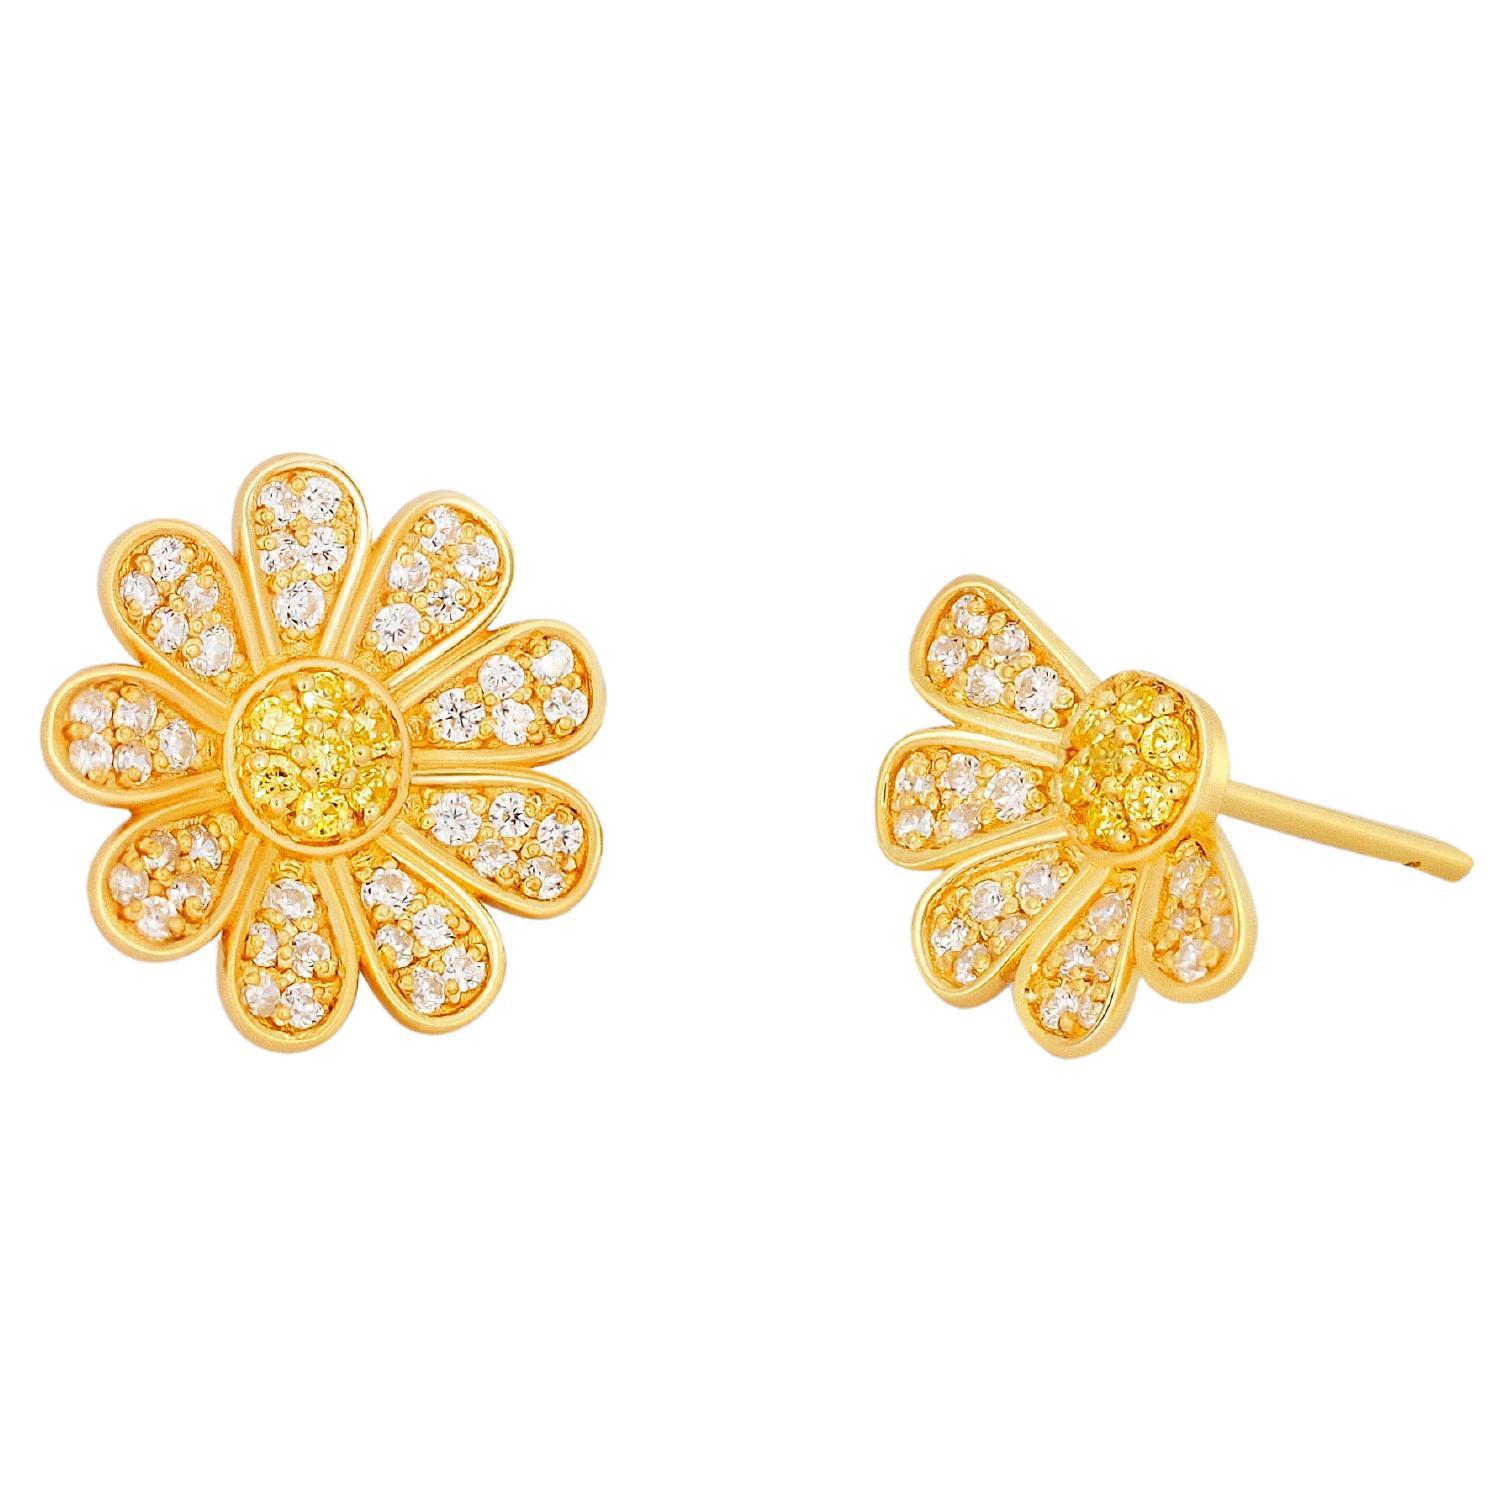 Daisy flower 14k gold earrings: Love Me, Love Me Not earrings studs